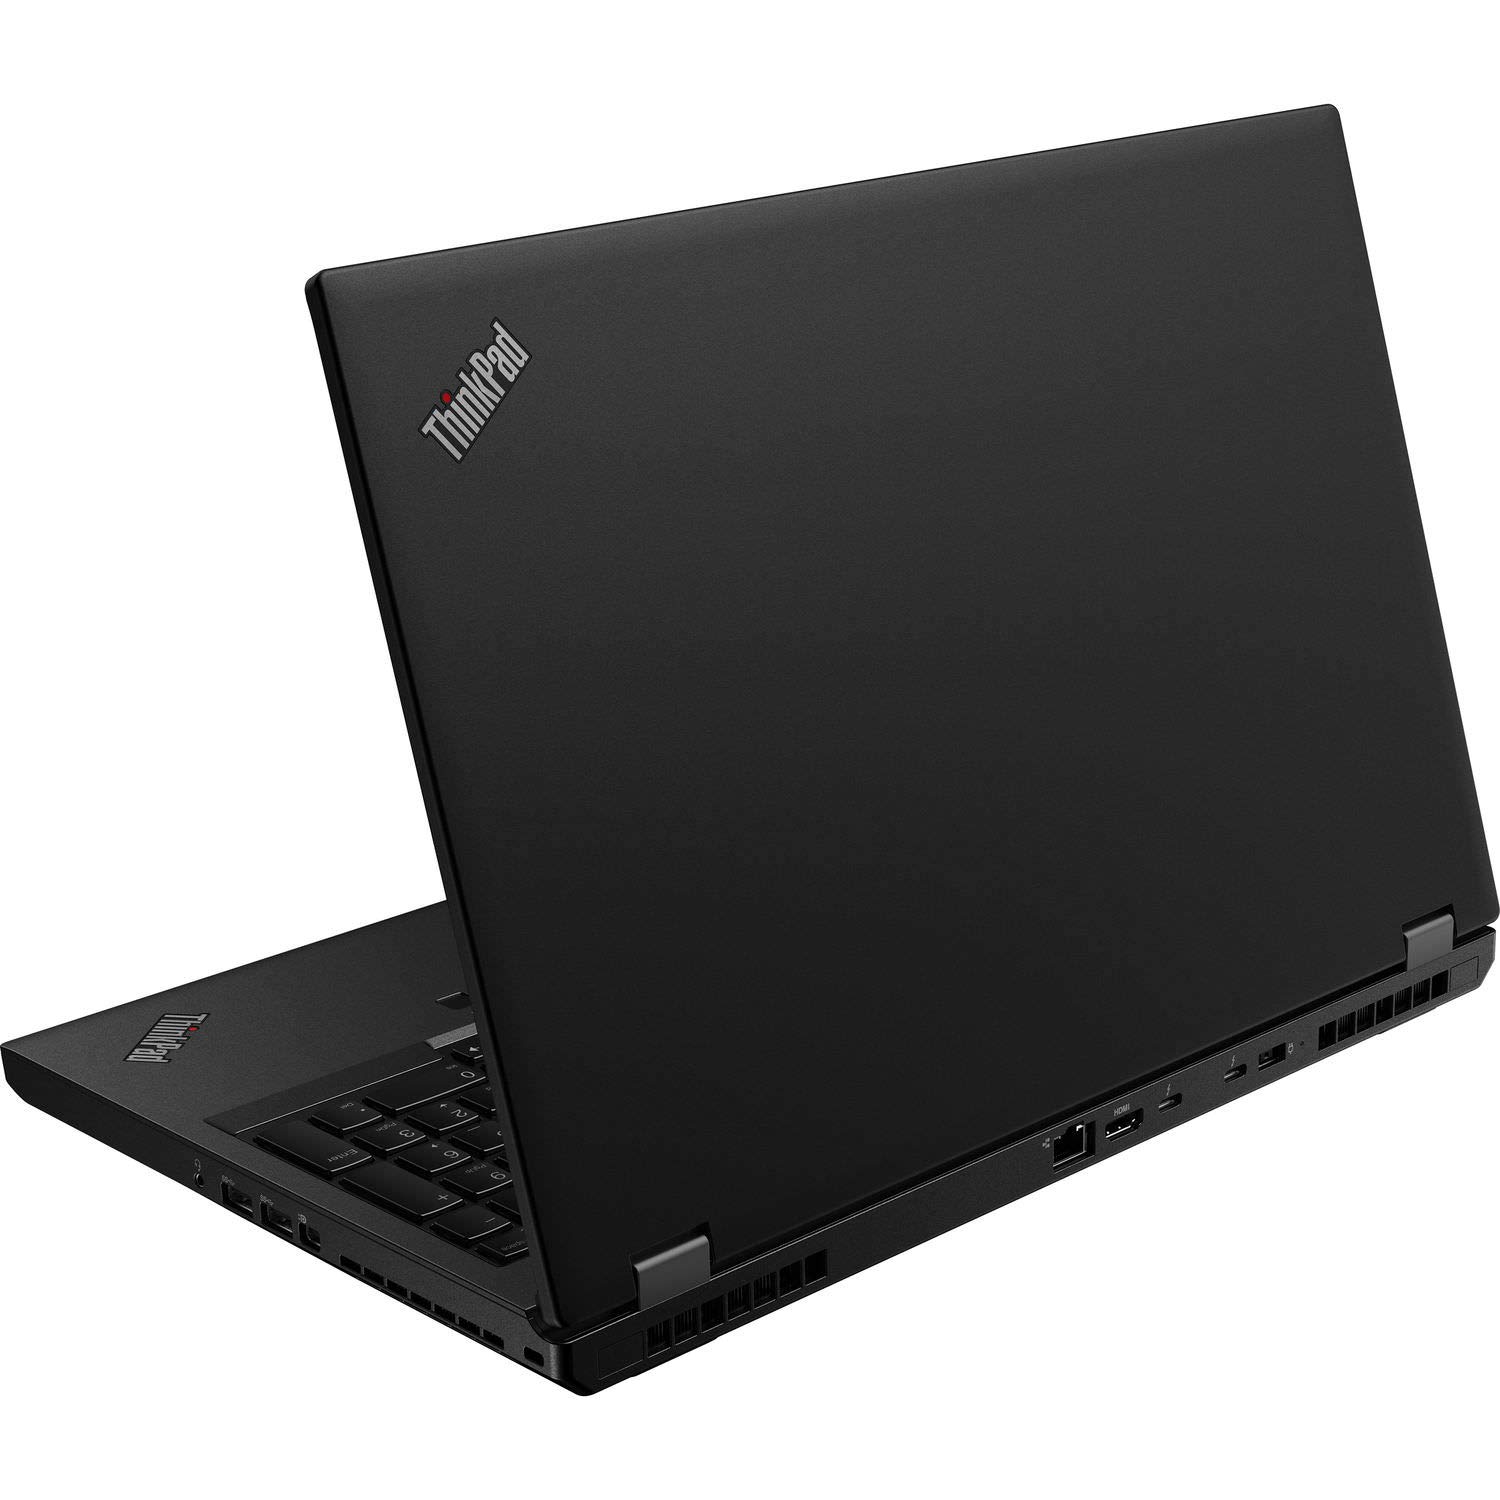 Lenovo New 2018 ThinkPad P52 Workstation Laptop - Windows 10 Pro - Intel Hexa-Core i7-8850H, 32GB RAM, 500GB SSD + 1TB HDD, 15.6